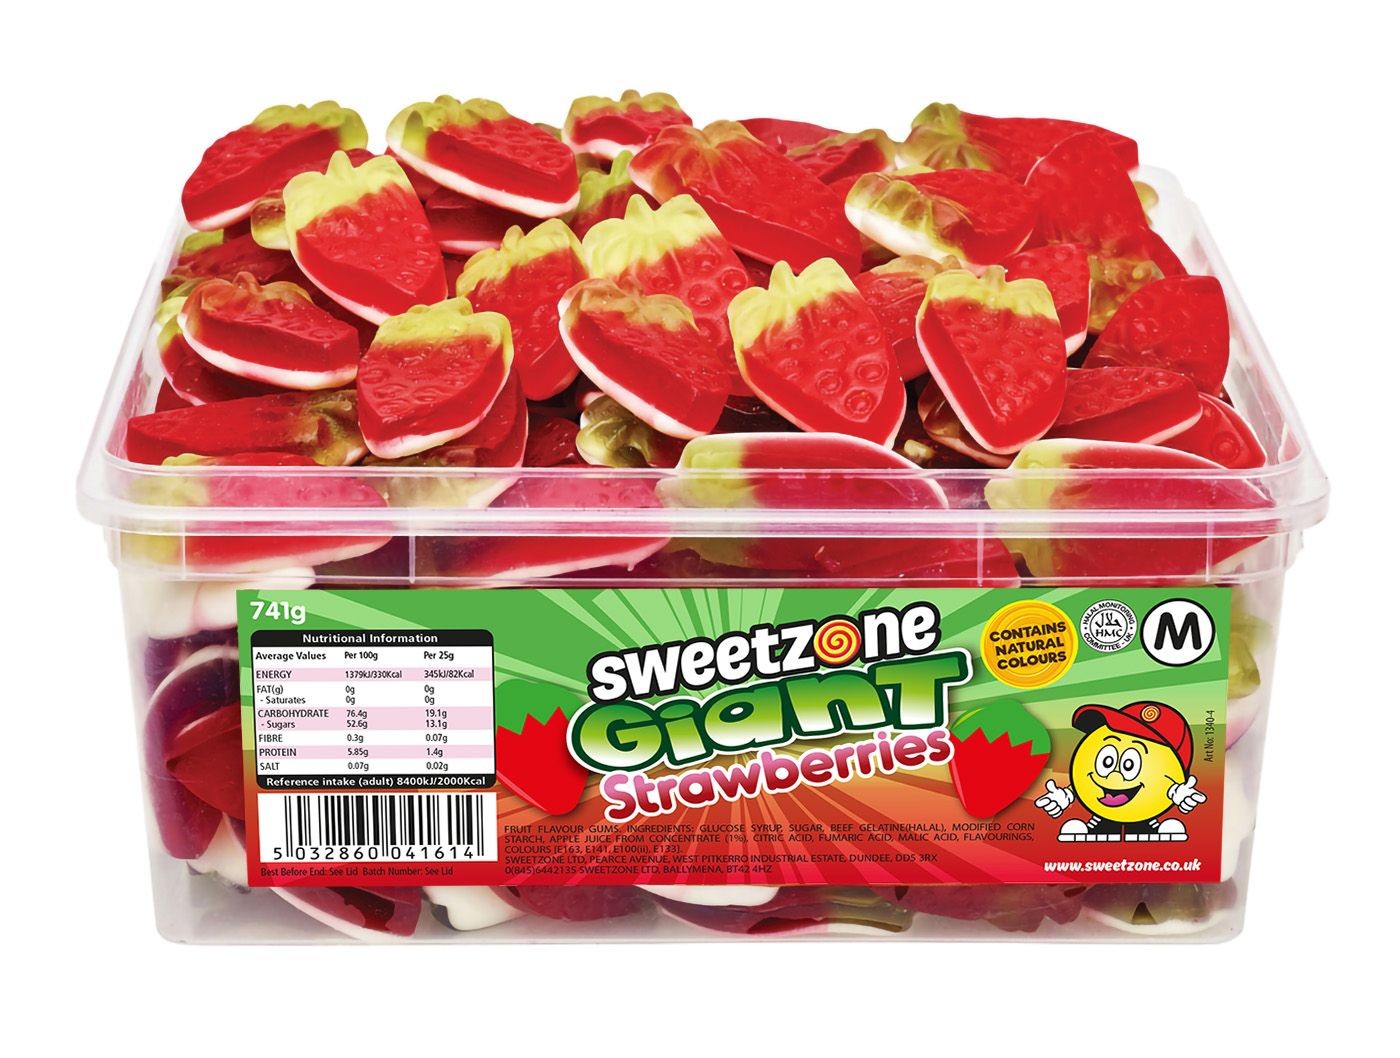 Giant Strawberries Tub (Sweetzone) 741g